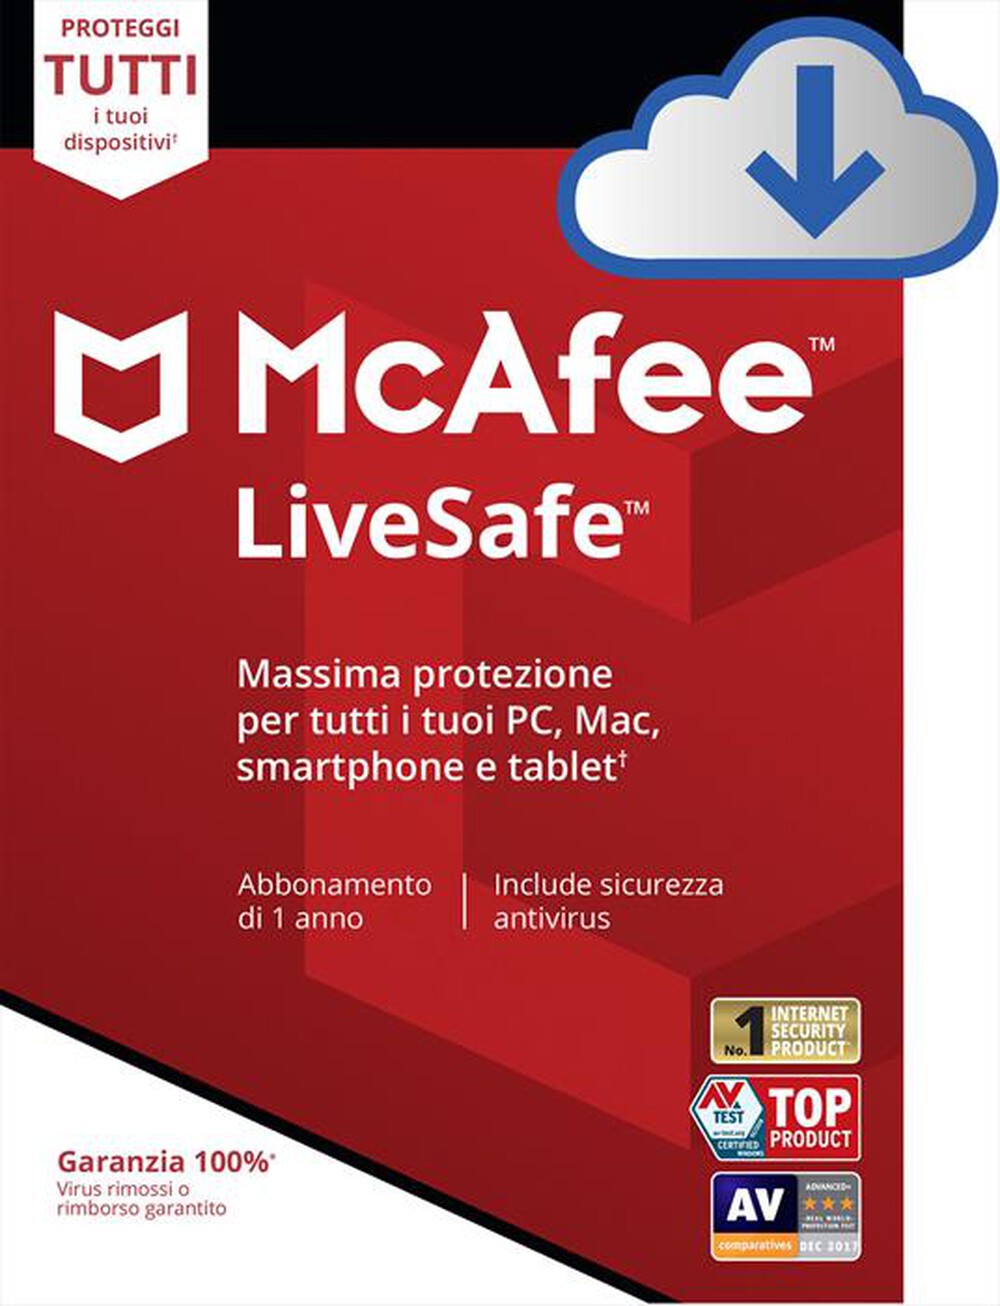 "MCAFEE - LiveSafe Device Attach"